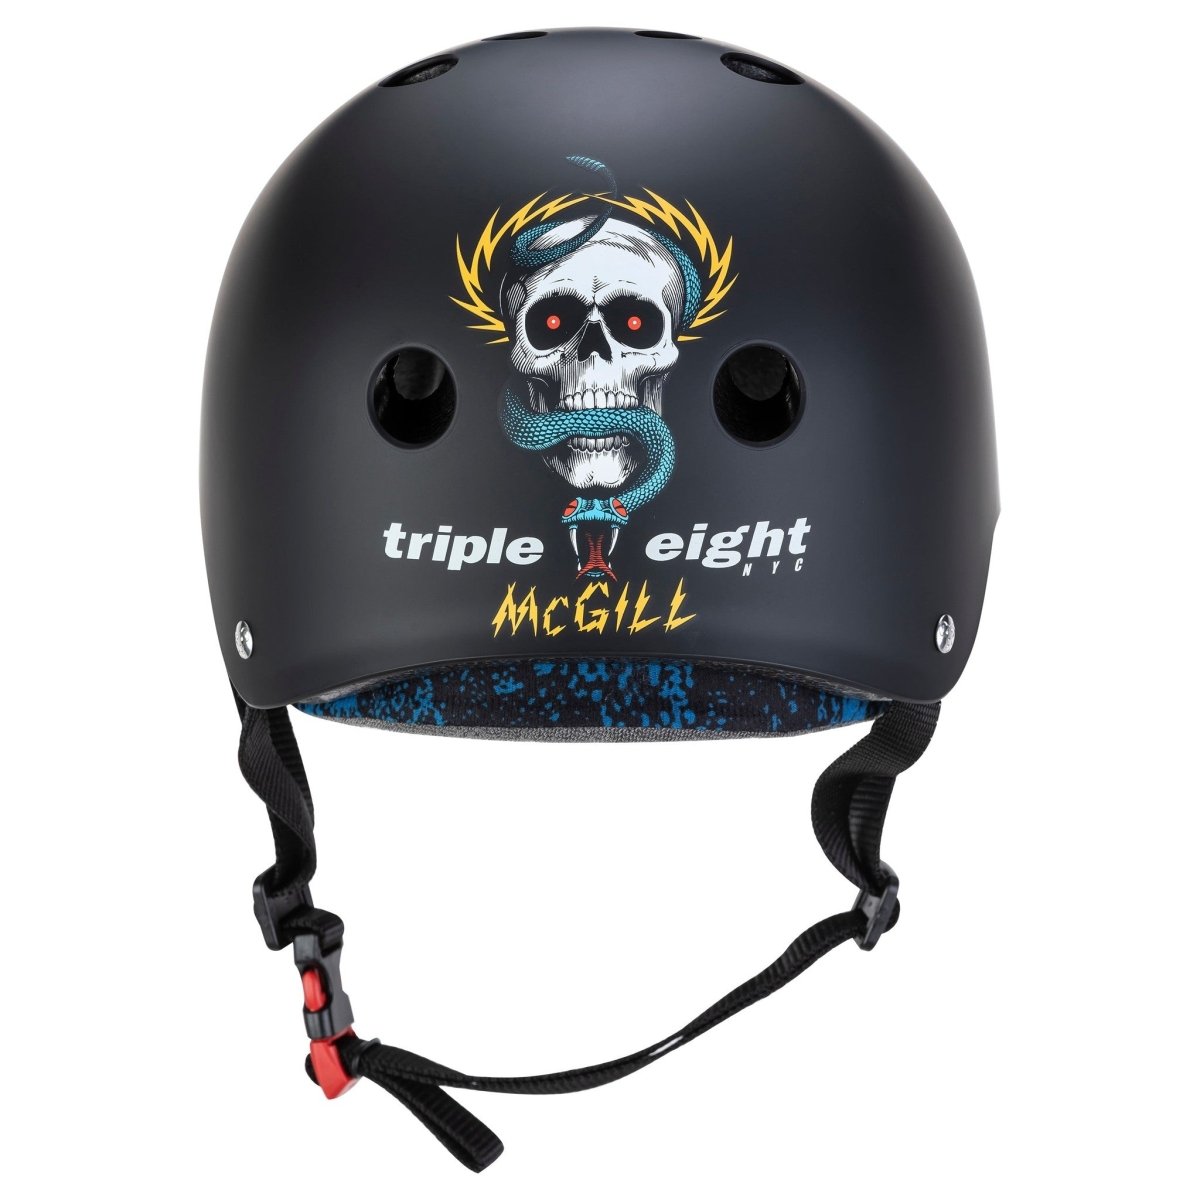 Cert Sweatsaver Helmet - Mike McGill - L/XL - Gear - Helmets